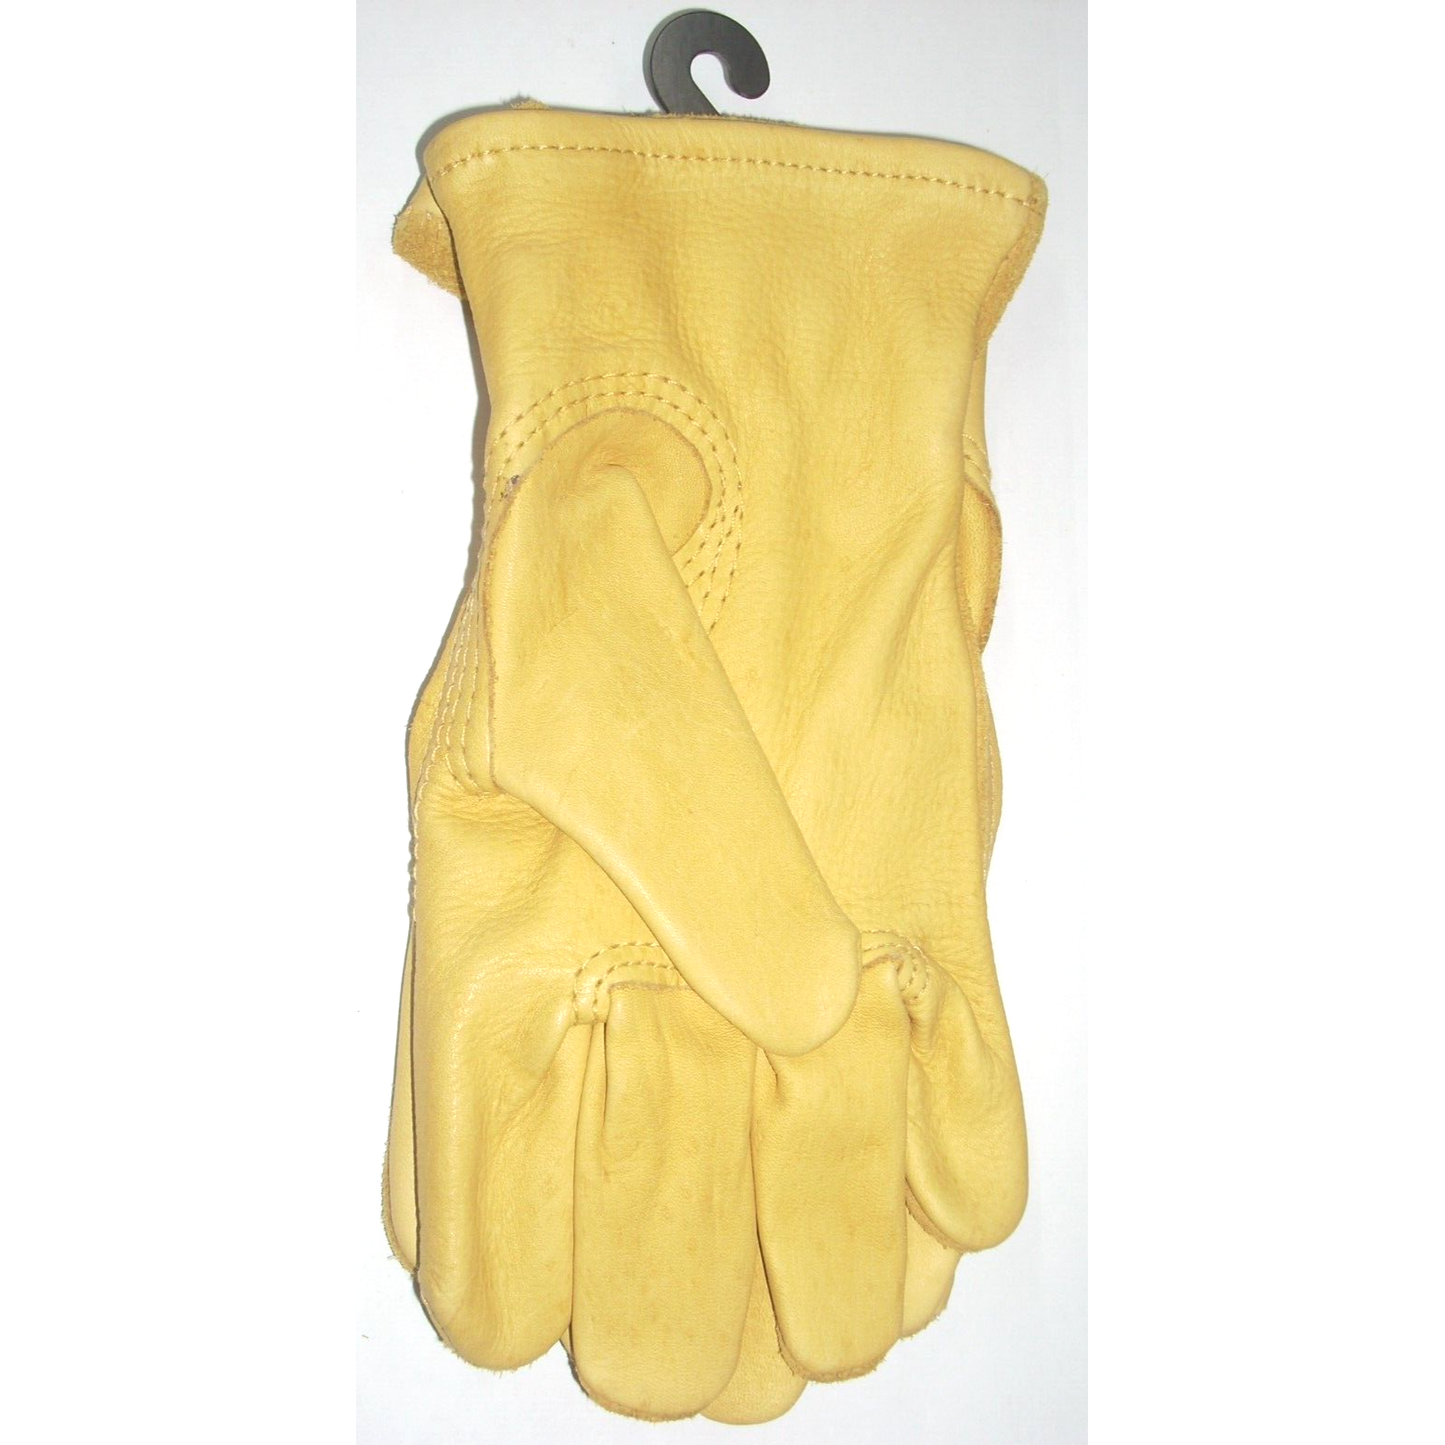 Lambert 3505 Tan Keystone Cowhide Leather Work Gloves Men's Small USA Made